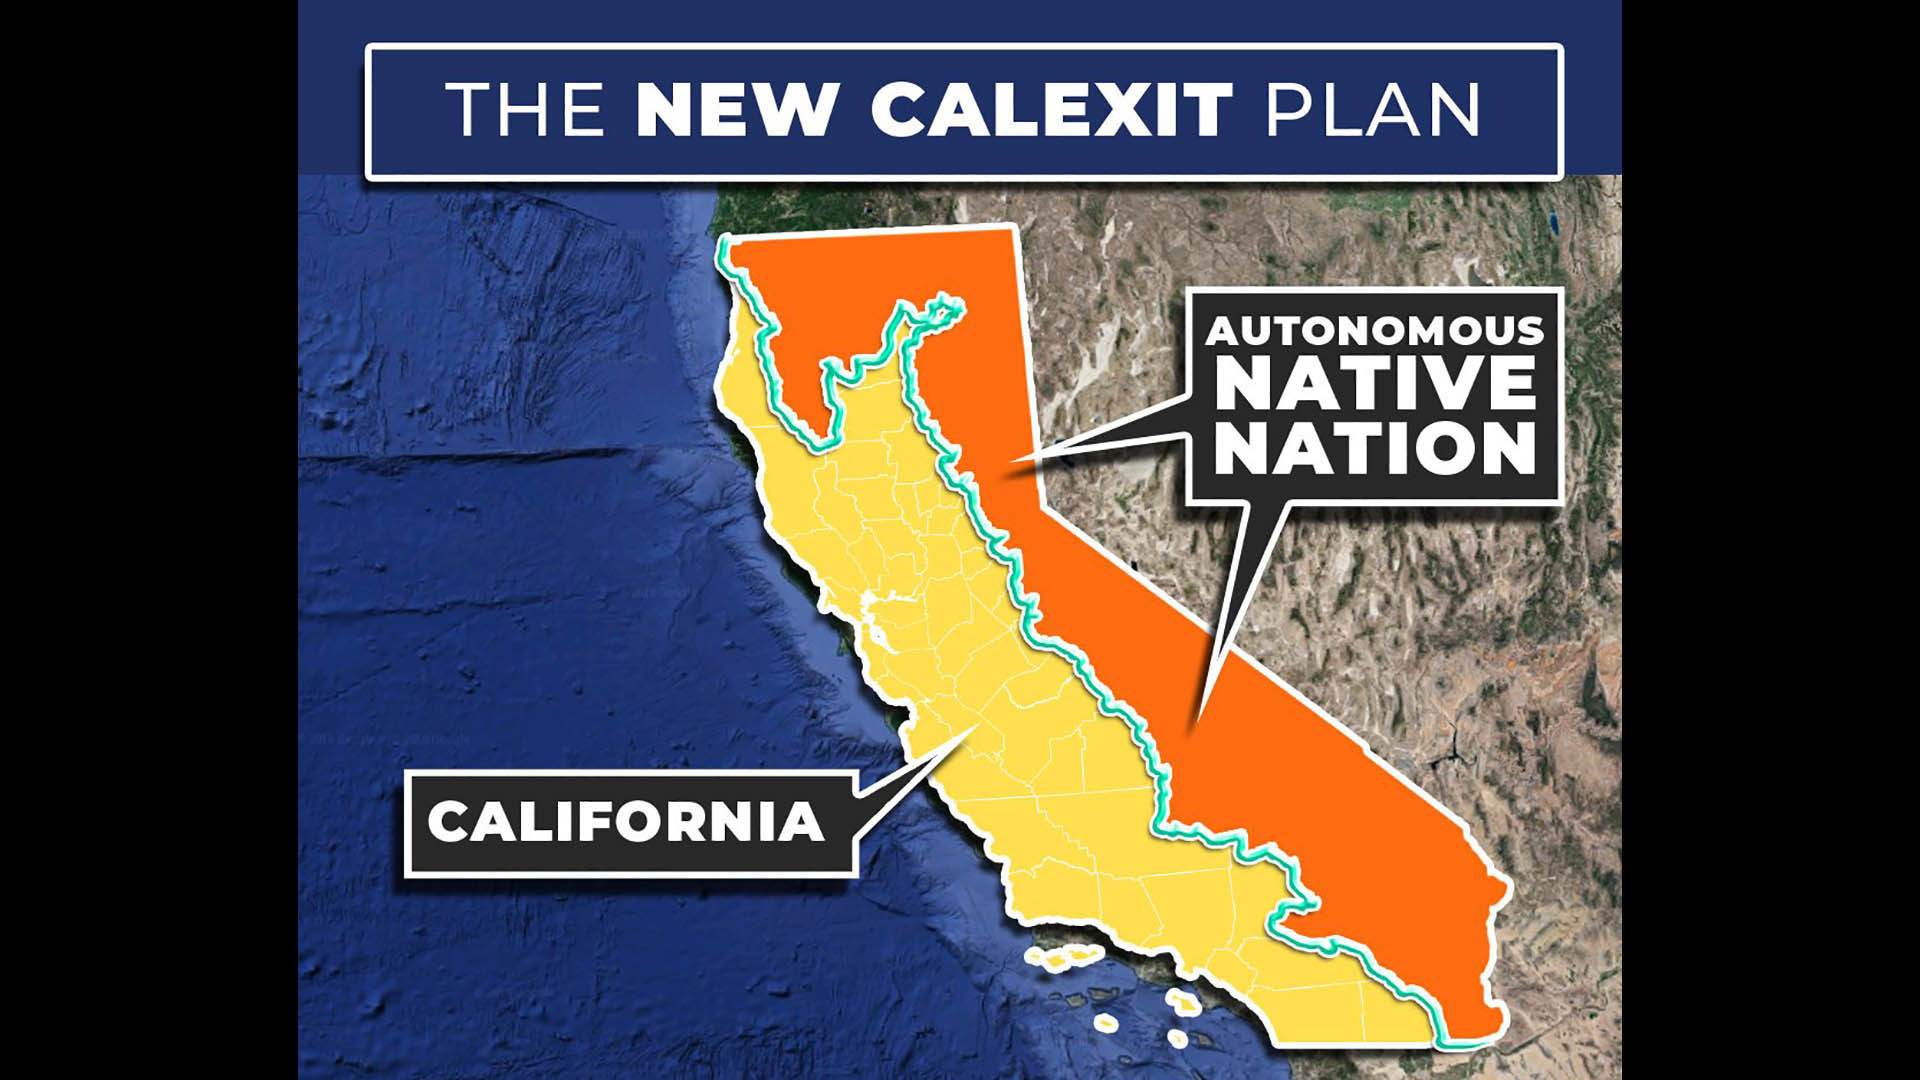 New California Secession Plan Unveiled